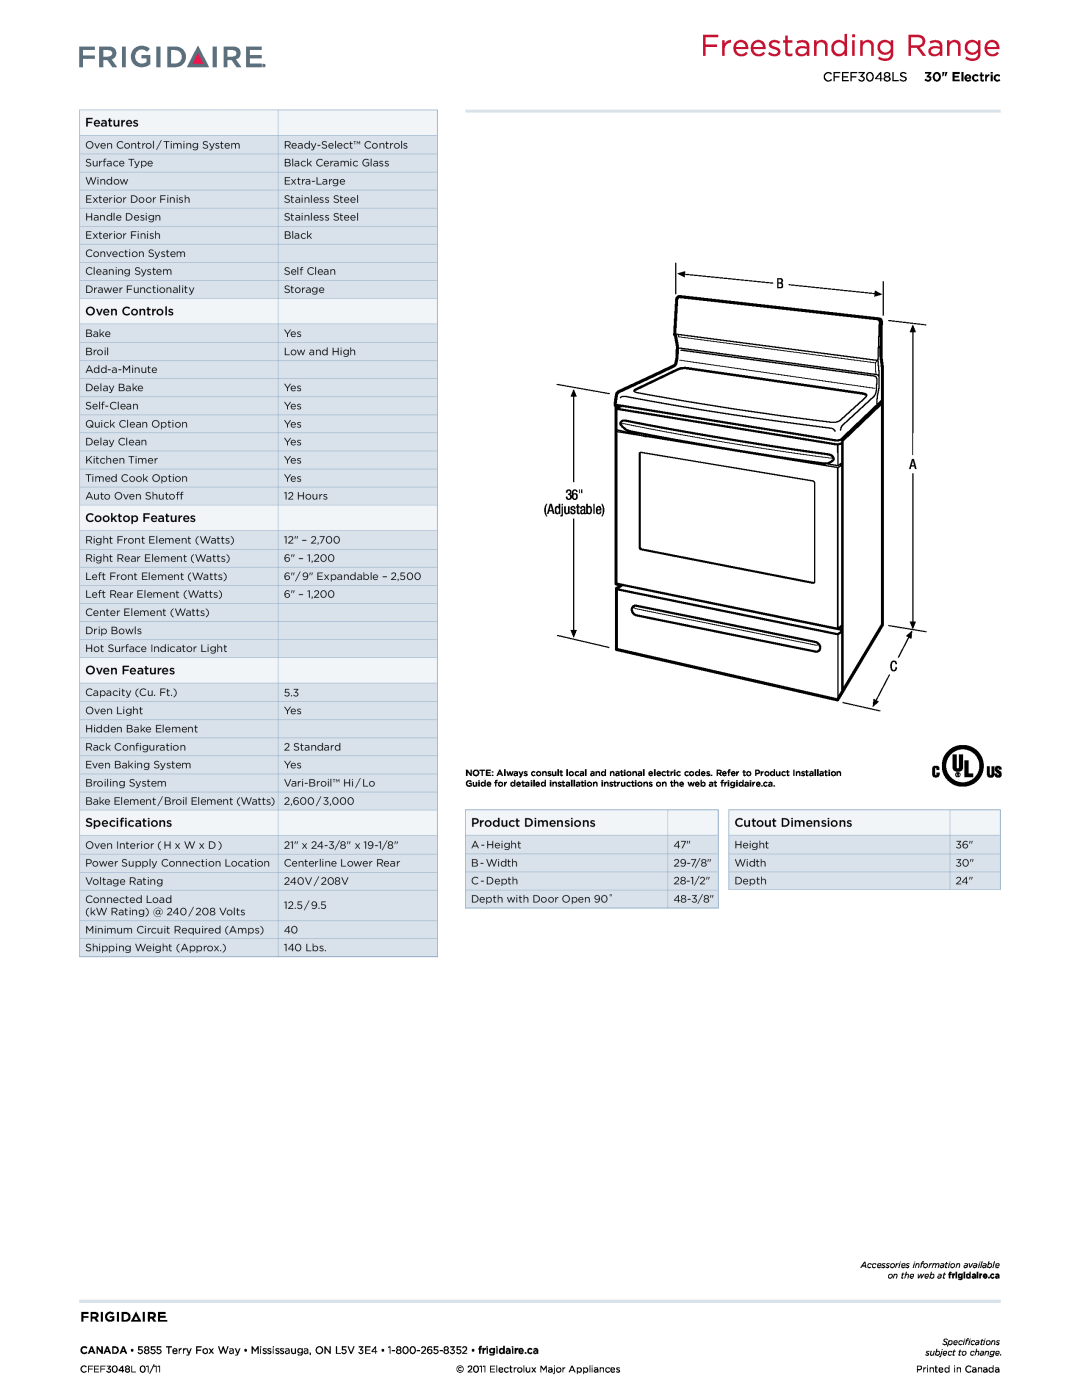 Frigidaire dimensions Freestanding Range, B A 36 Adjustable C, CFEF3048LS 30 Electric 